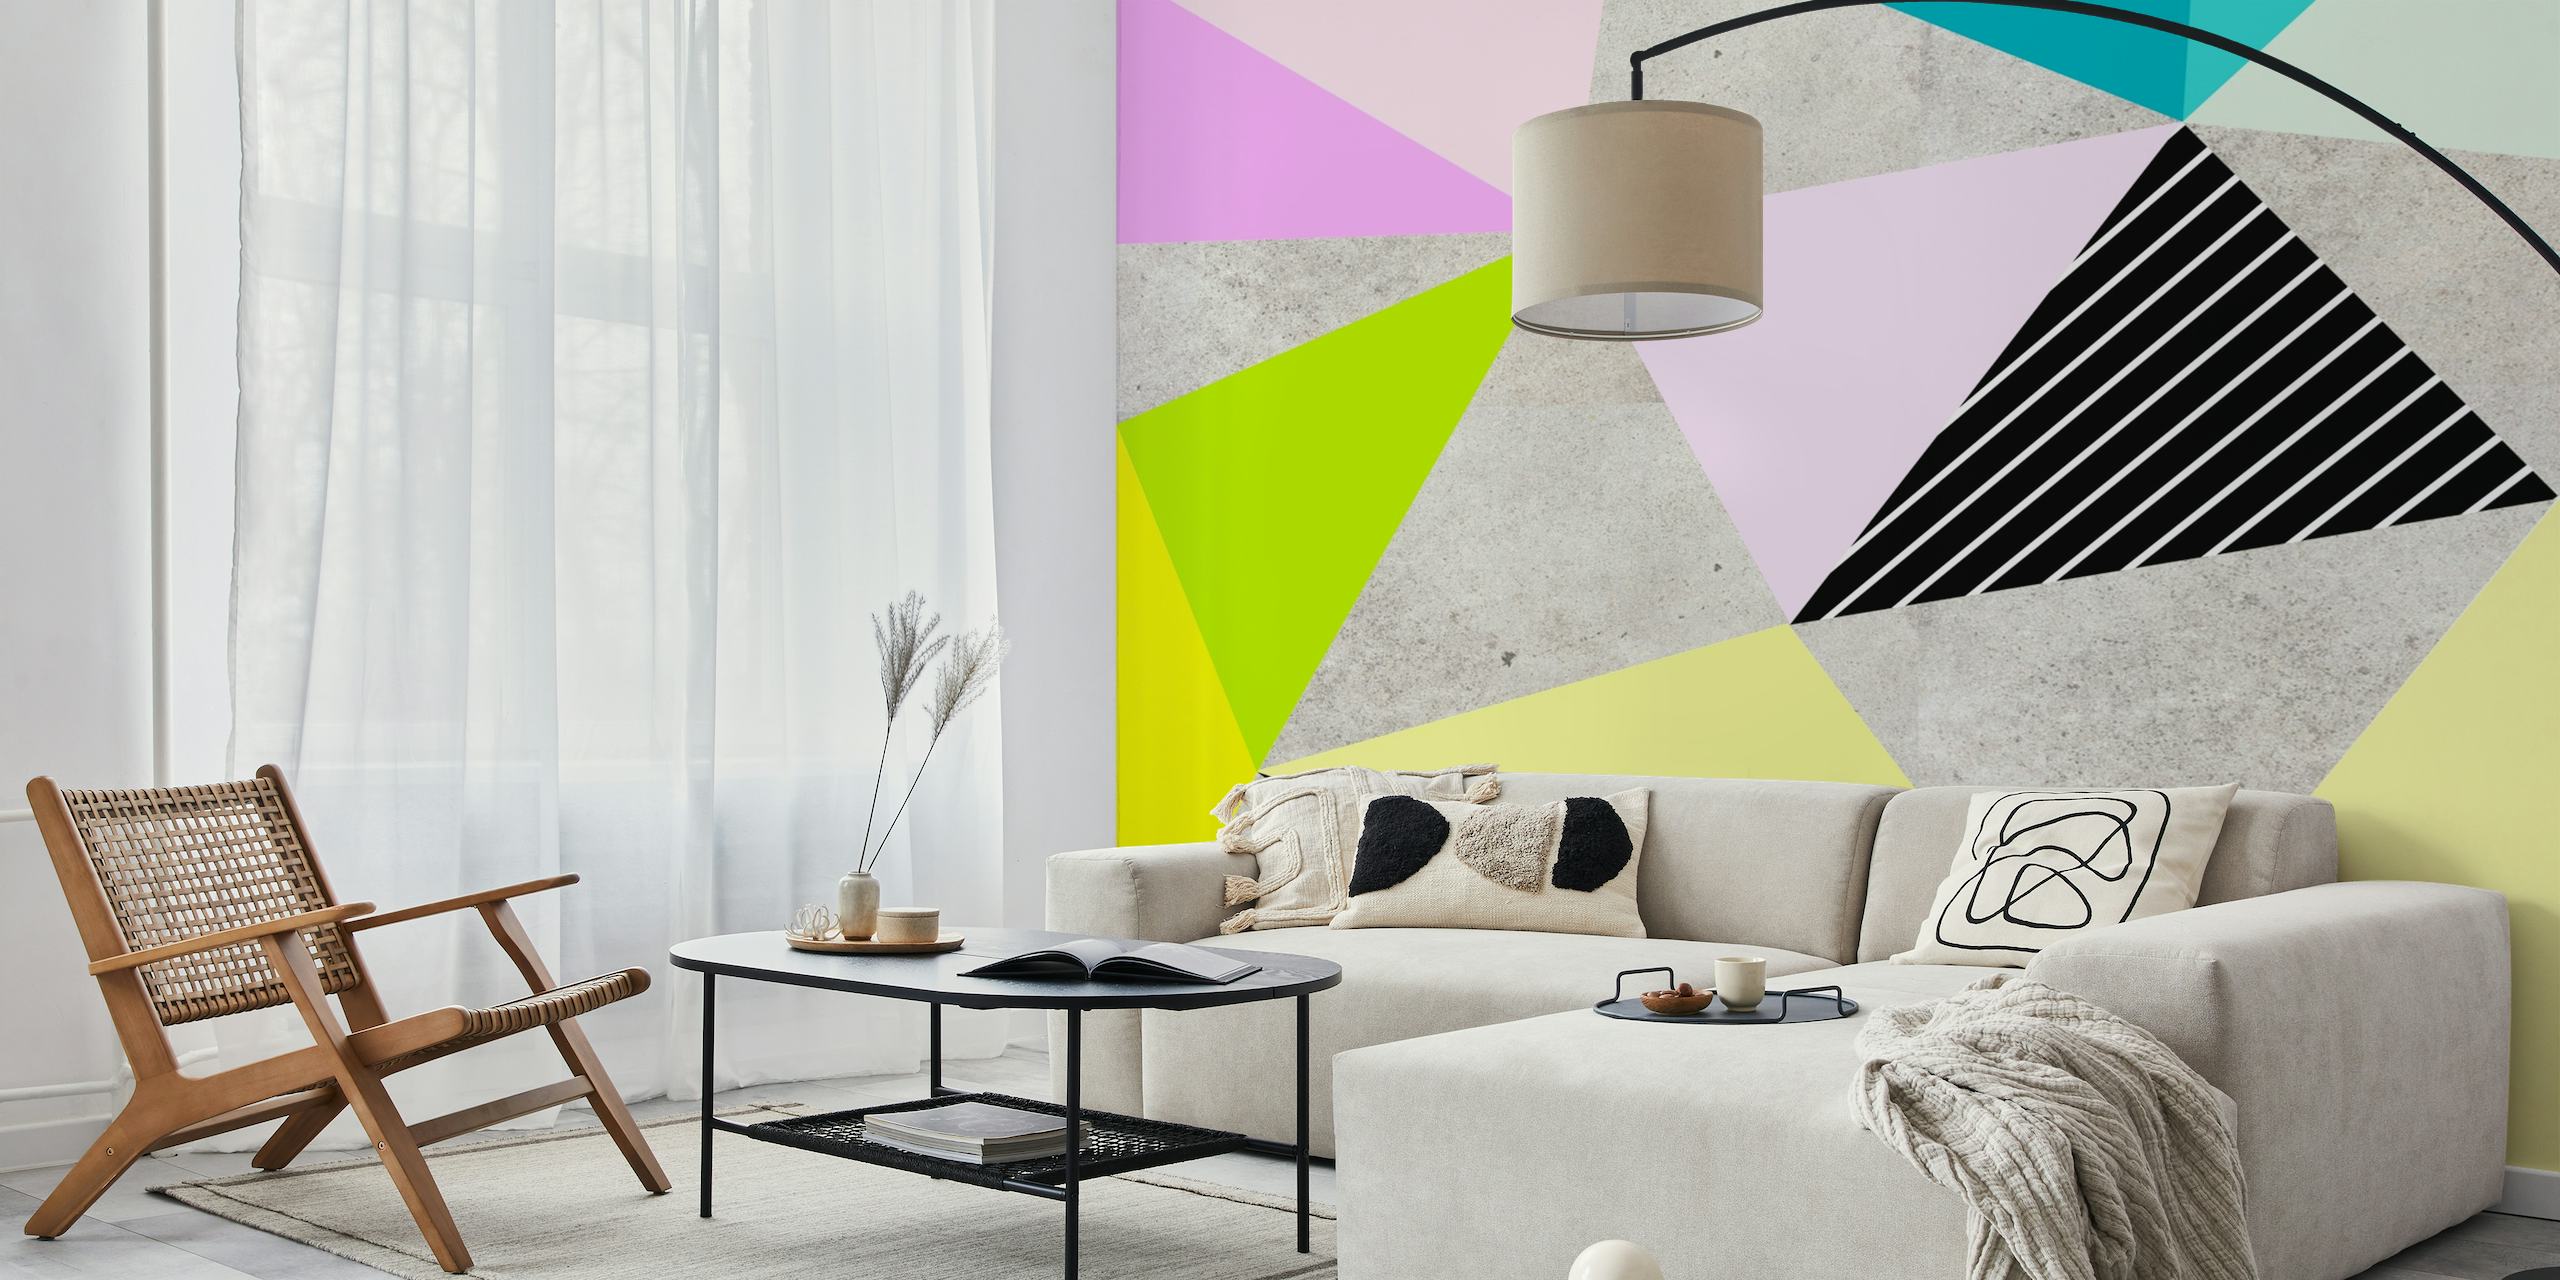 Papel de parede colorido de formas geométricas com tons pastel e padrões pontilhados